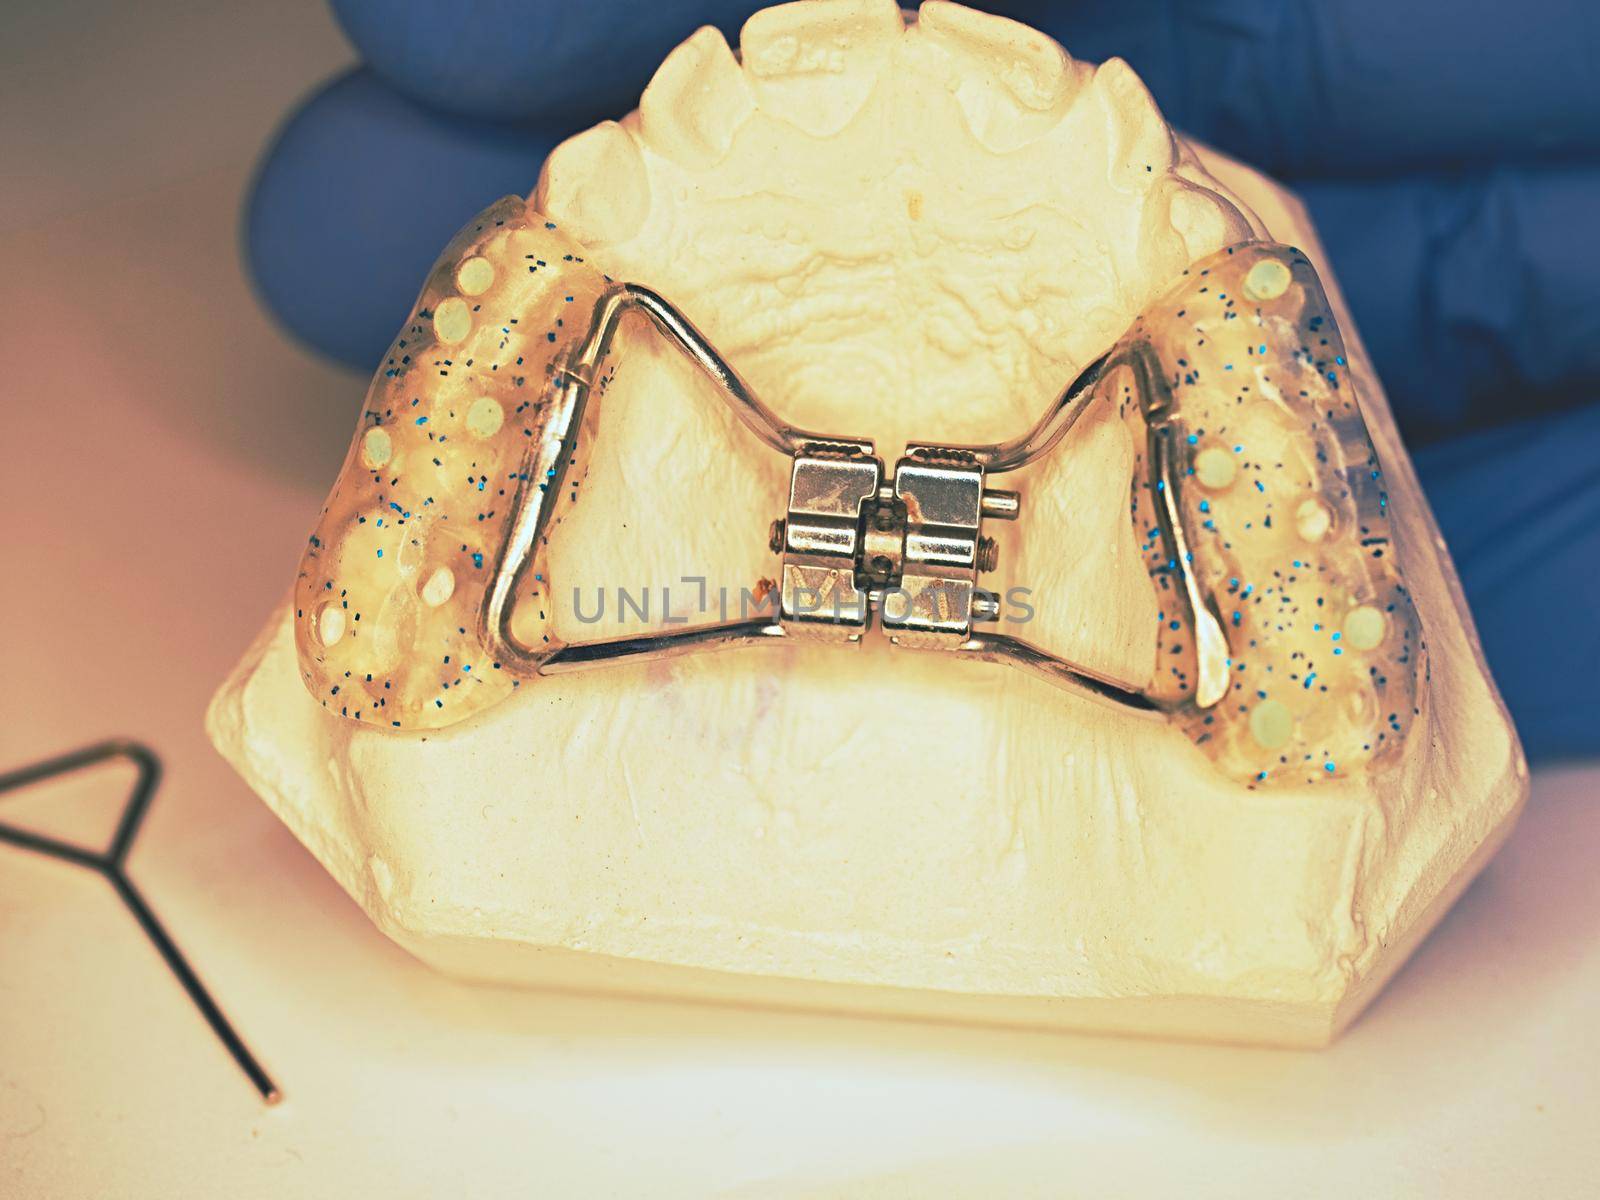 Hyrax braces wear on patient teeth gypsum model.  by rdonar2